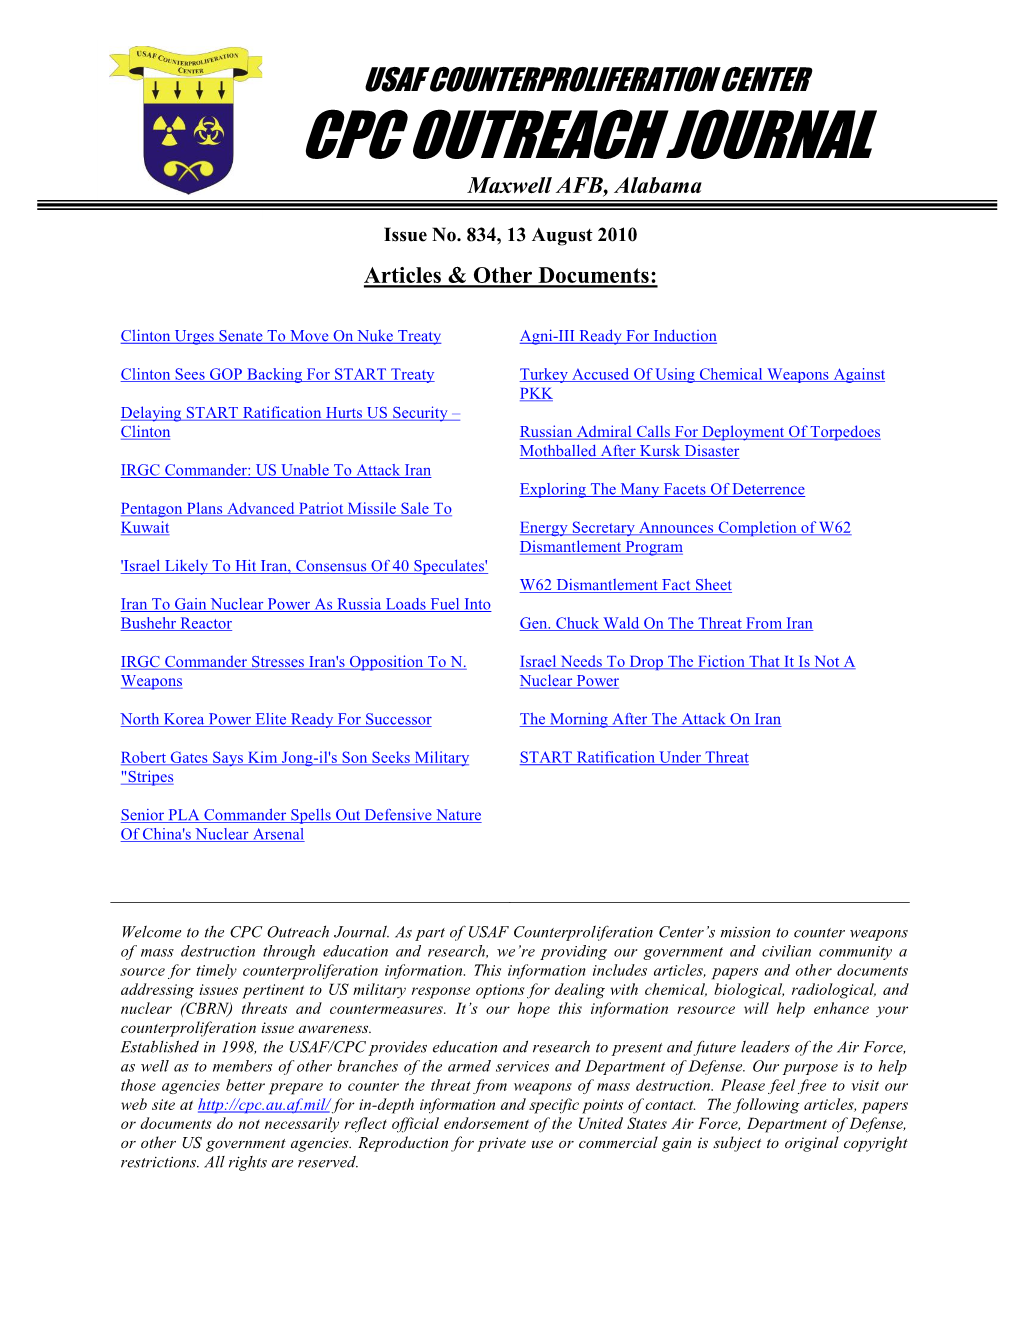 USAF Counterproliferation Center CPC Outreach Journal #834